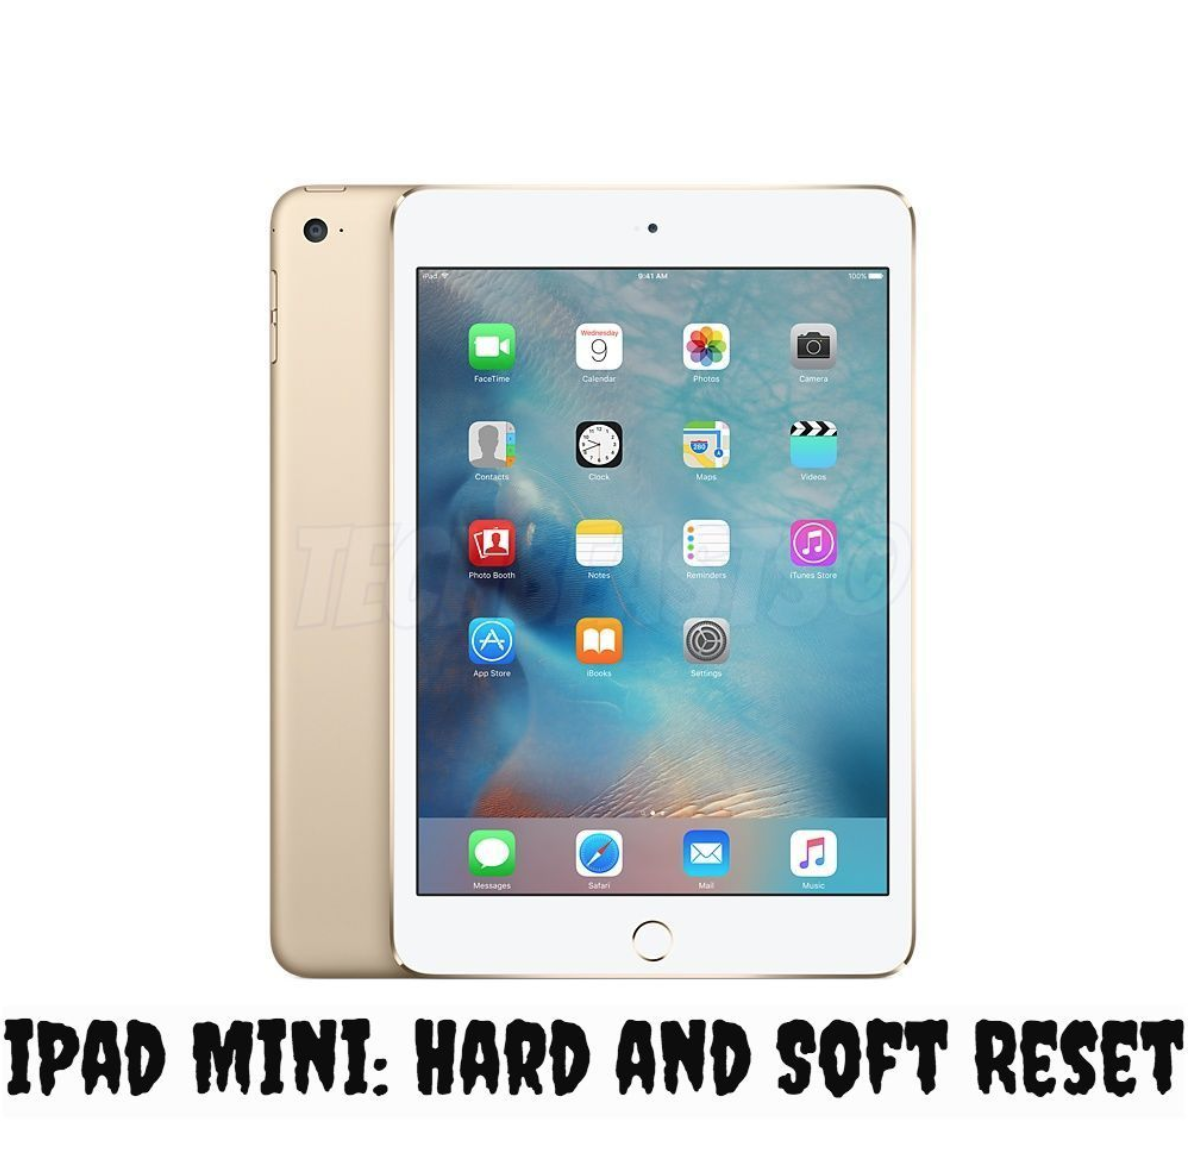 iPad Mini: Hard and Soft Reset